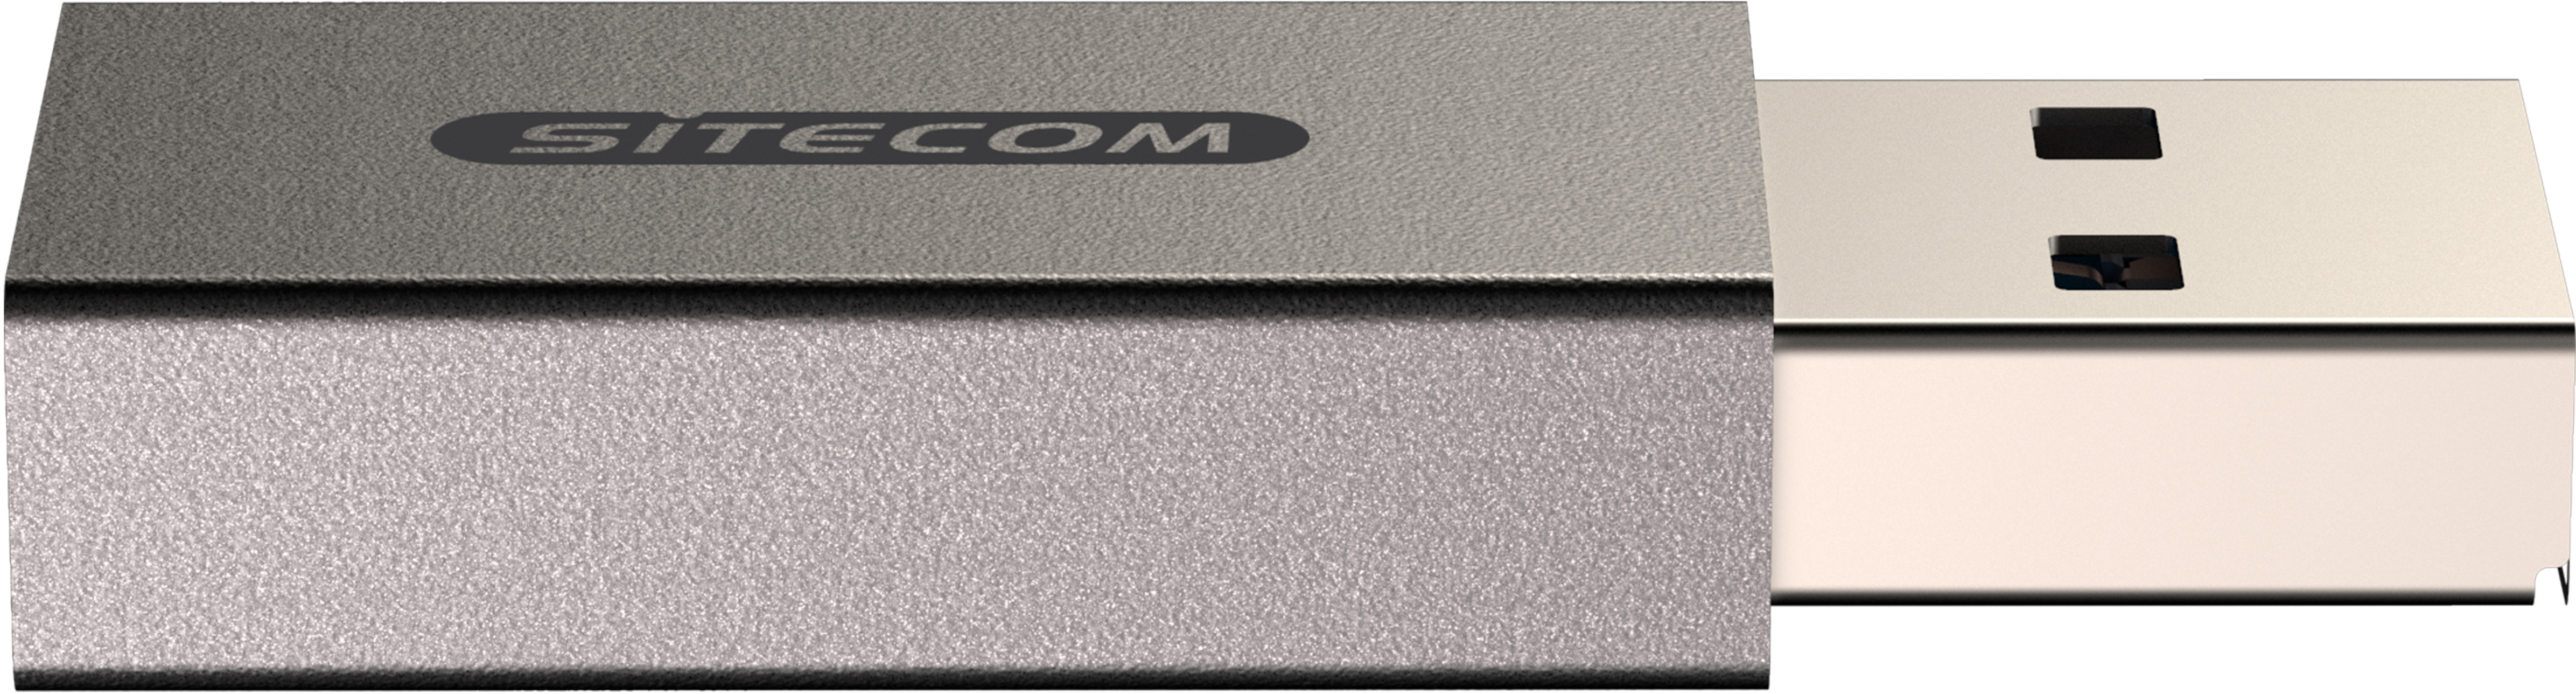 SITECOM USB-A to USB-C Adapter CN-397